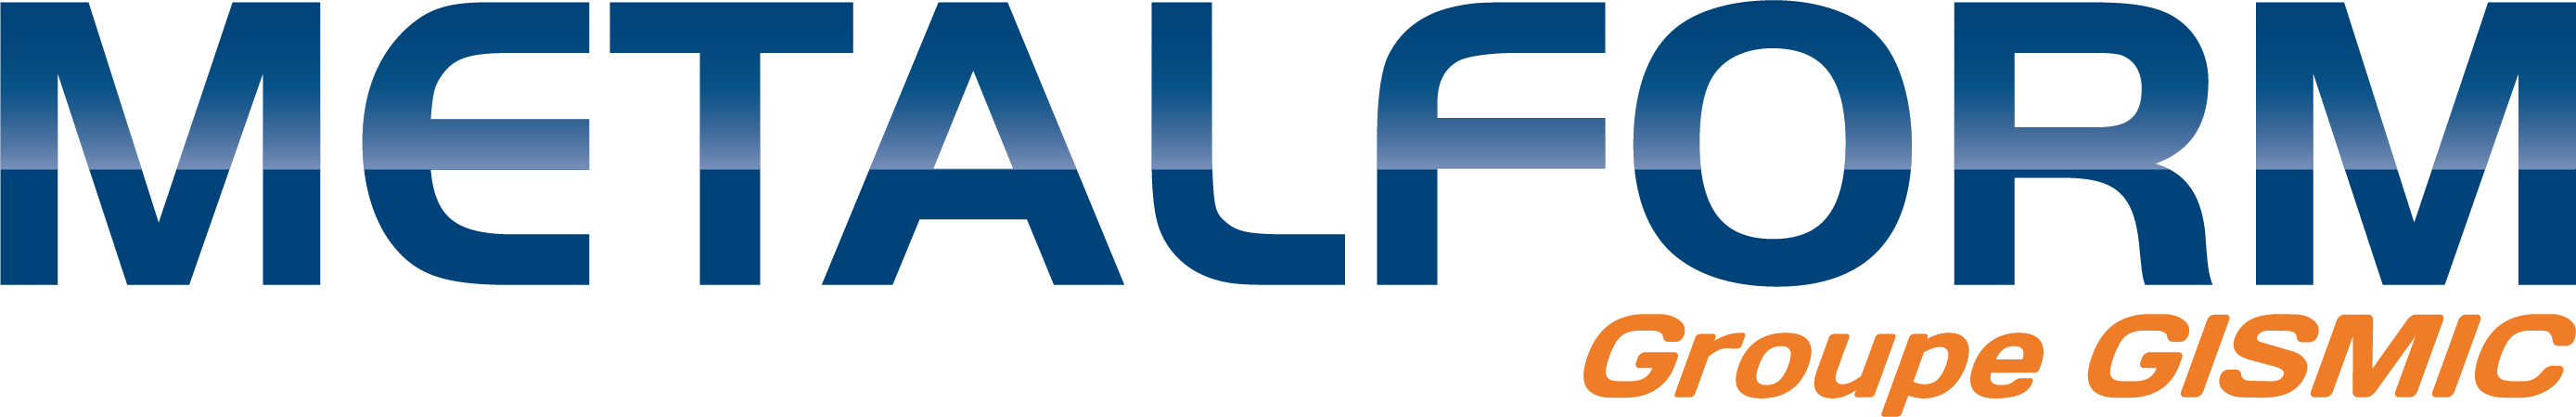 logo MetalForm